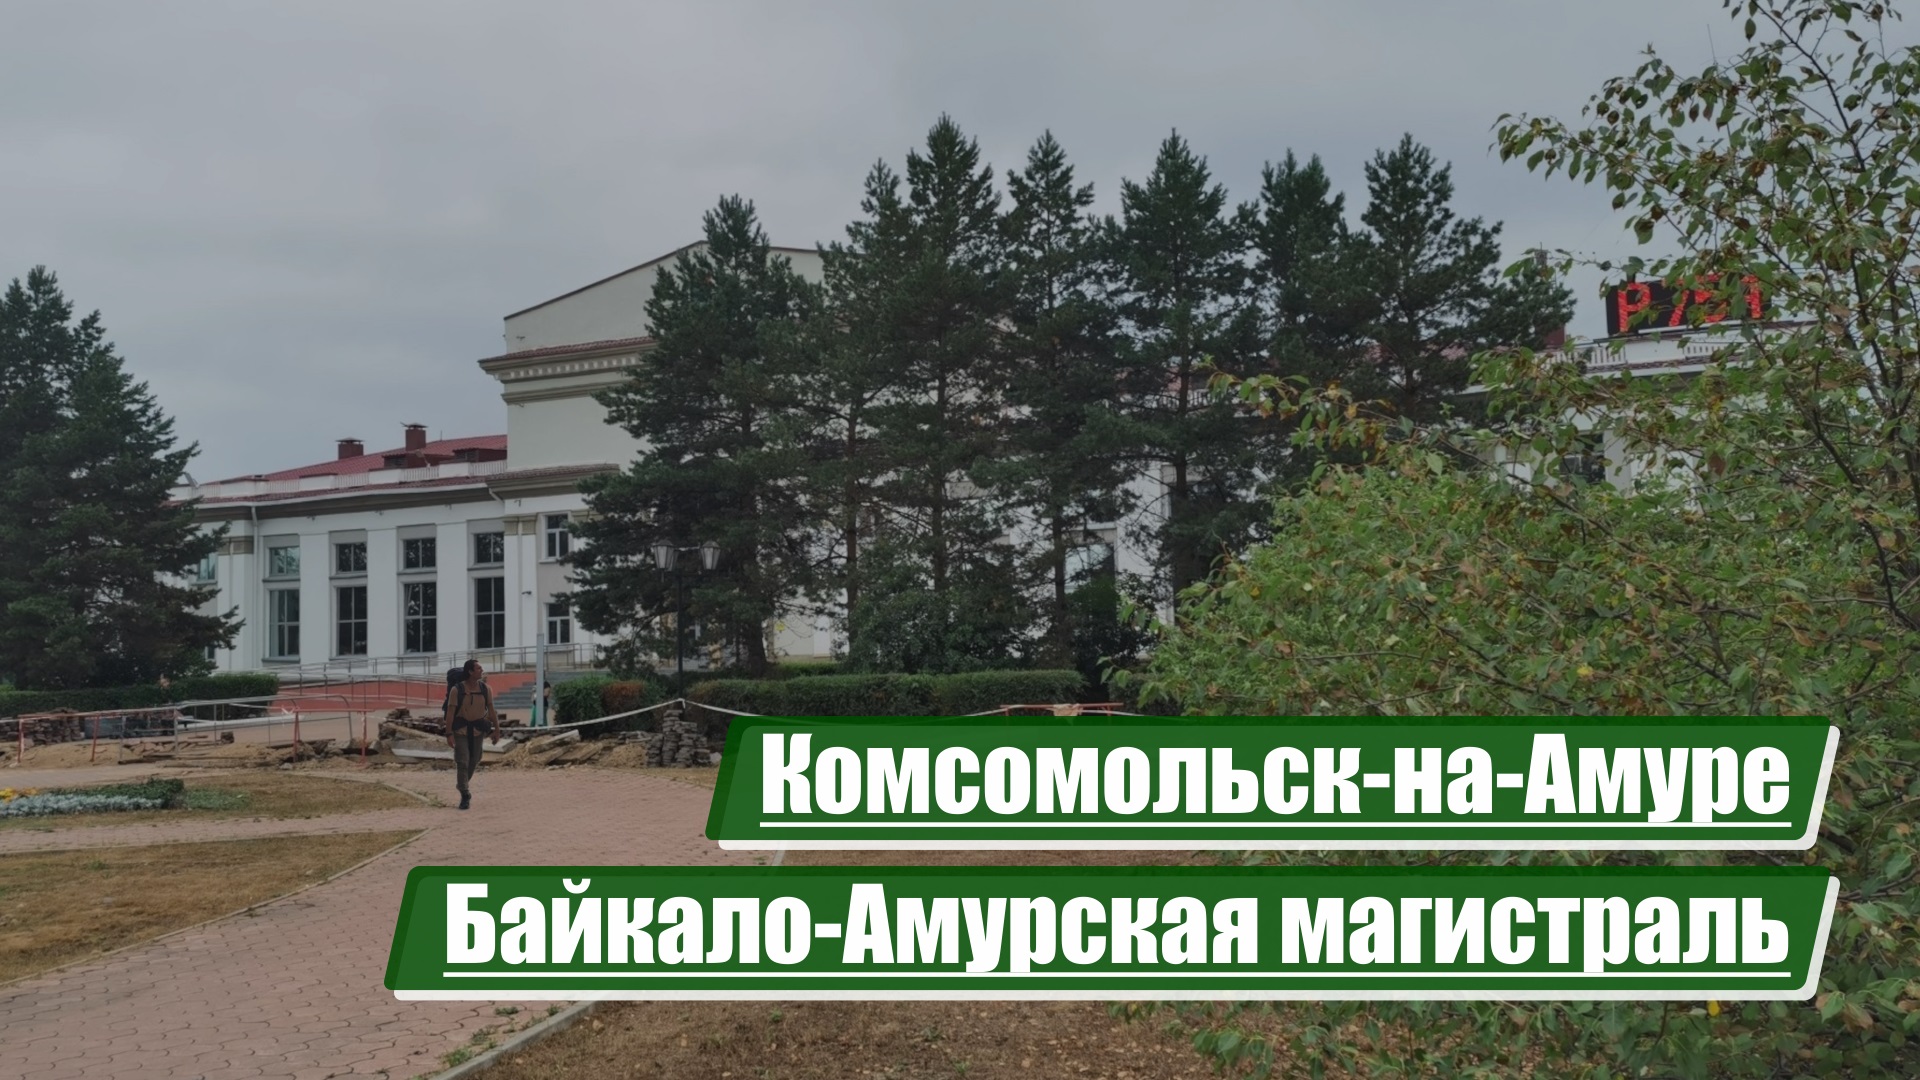 Комсомольск-на-Амуре | Байкало-Амурская магистраль (БАМ)